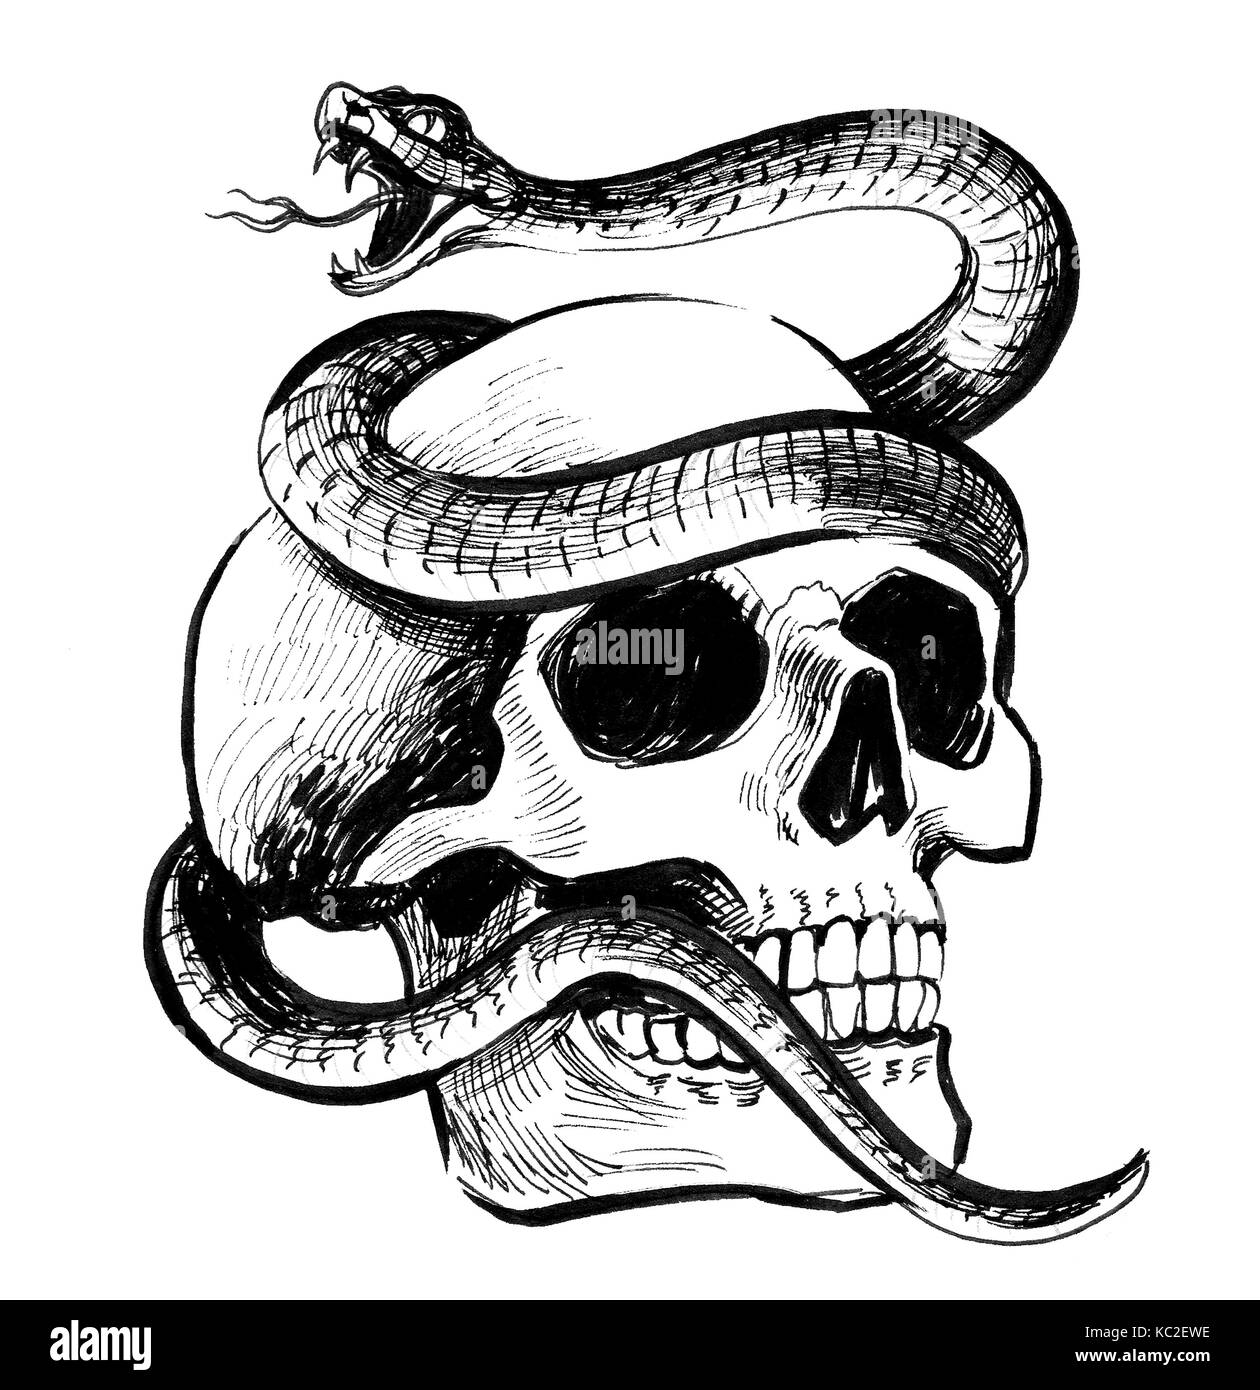 Змея через череп